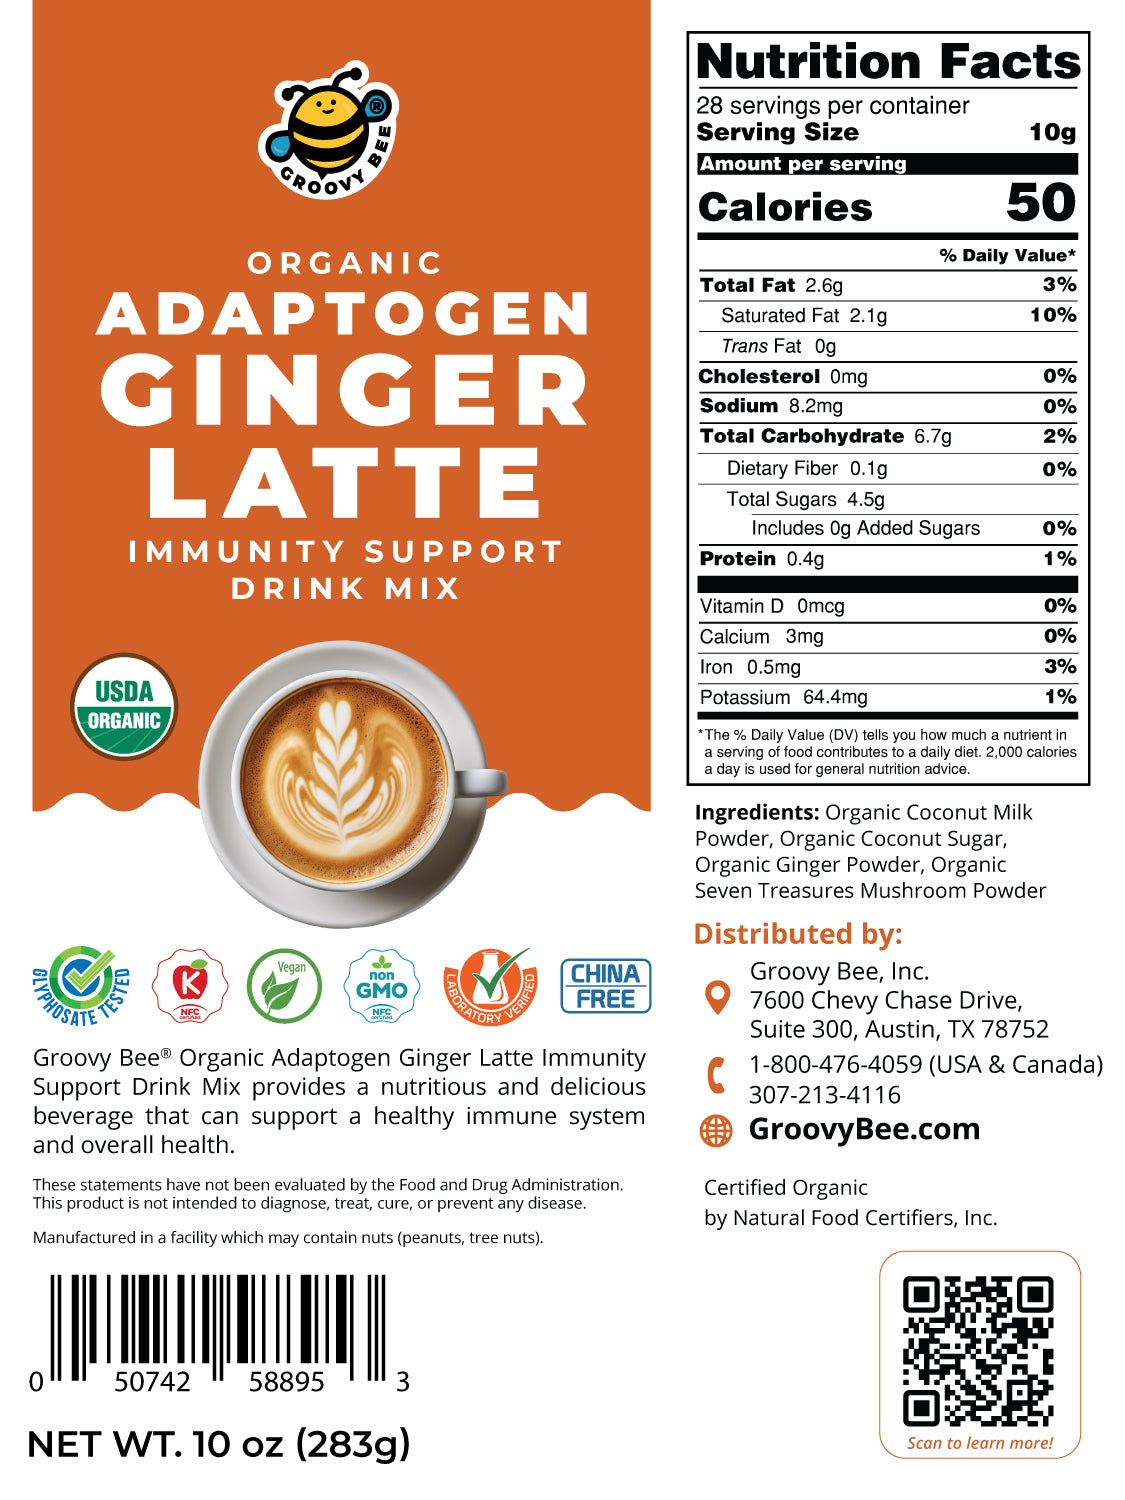 Organic Adaptogen Ginger Latte - Immune Support Drink Mix 10 oz (283g)